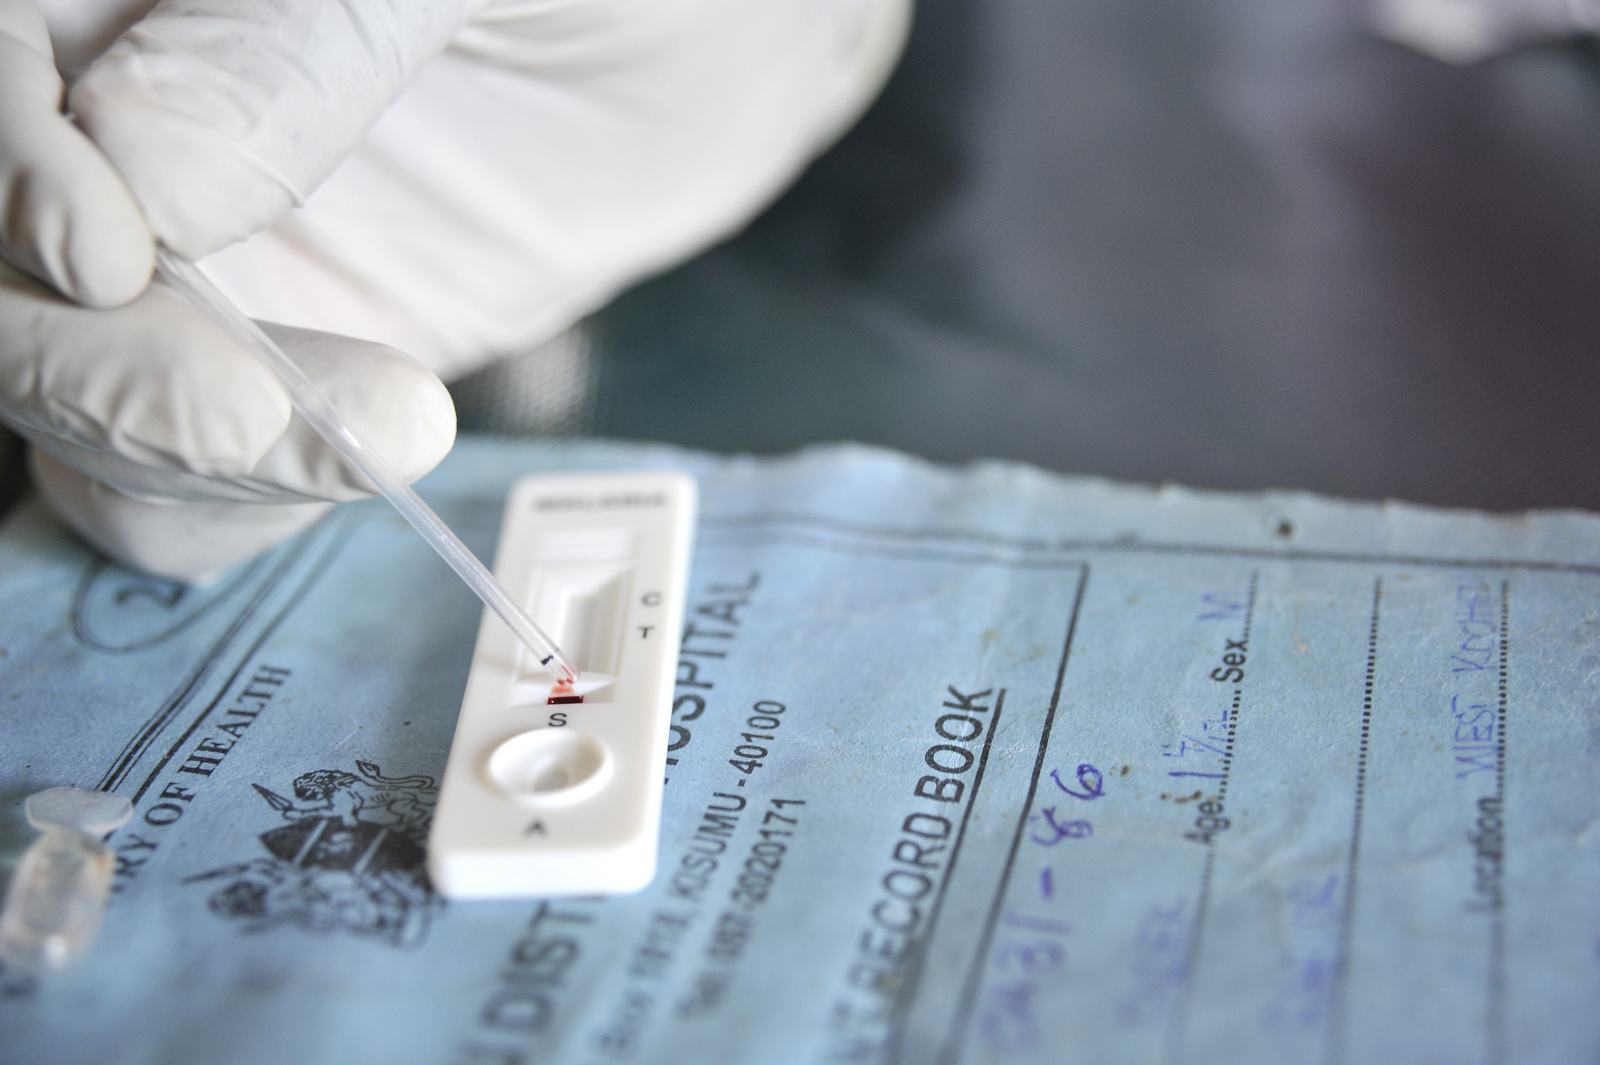 Diagnostic test for malaria